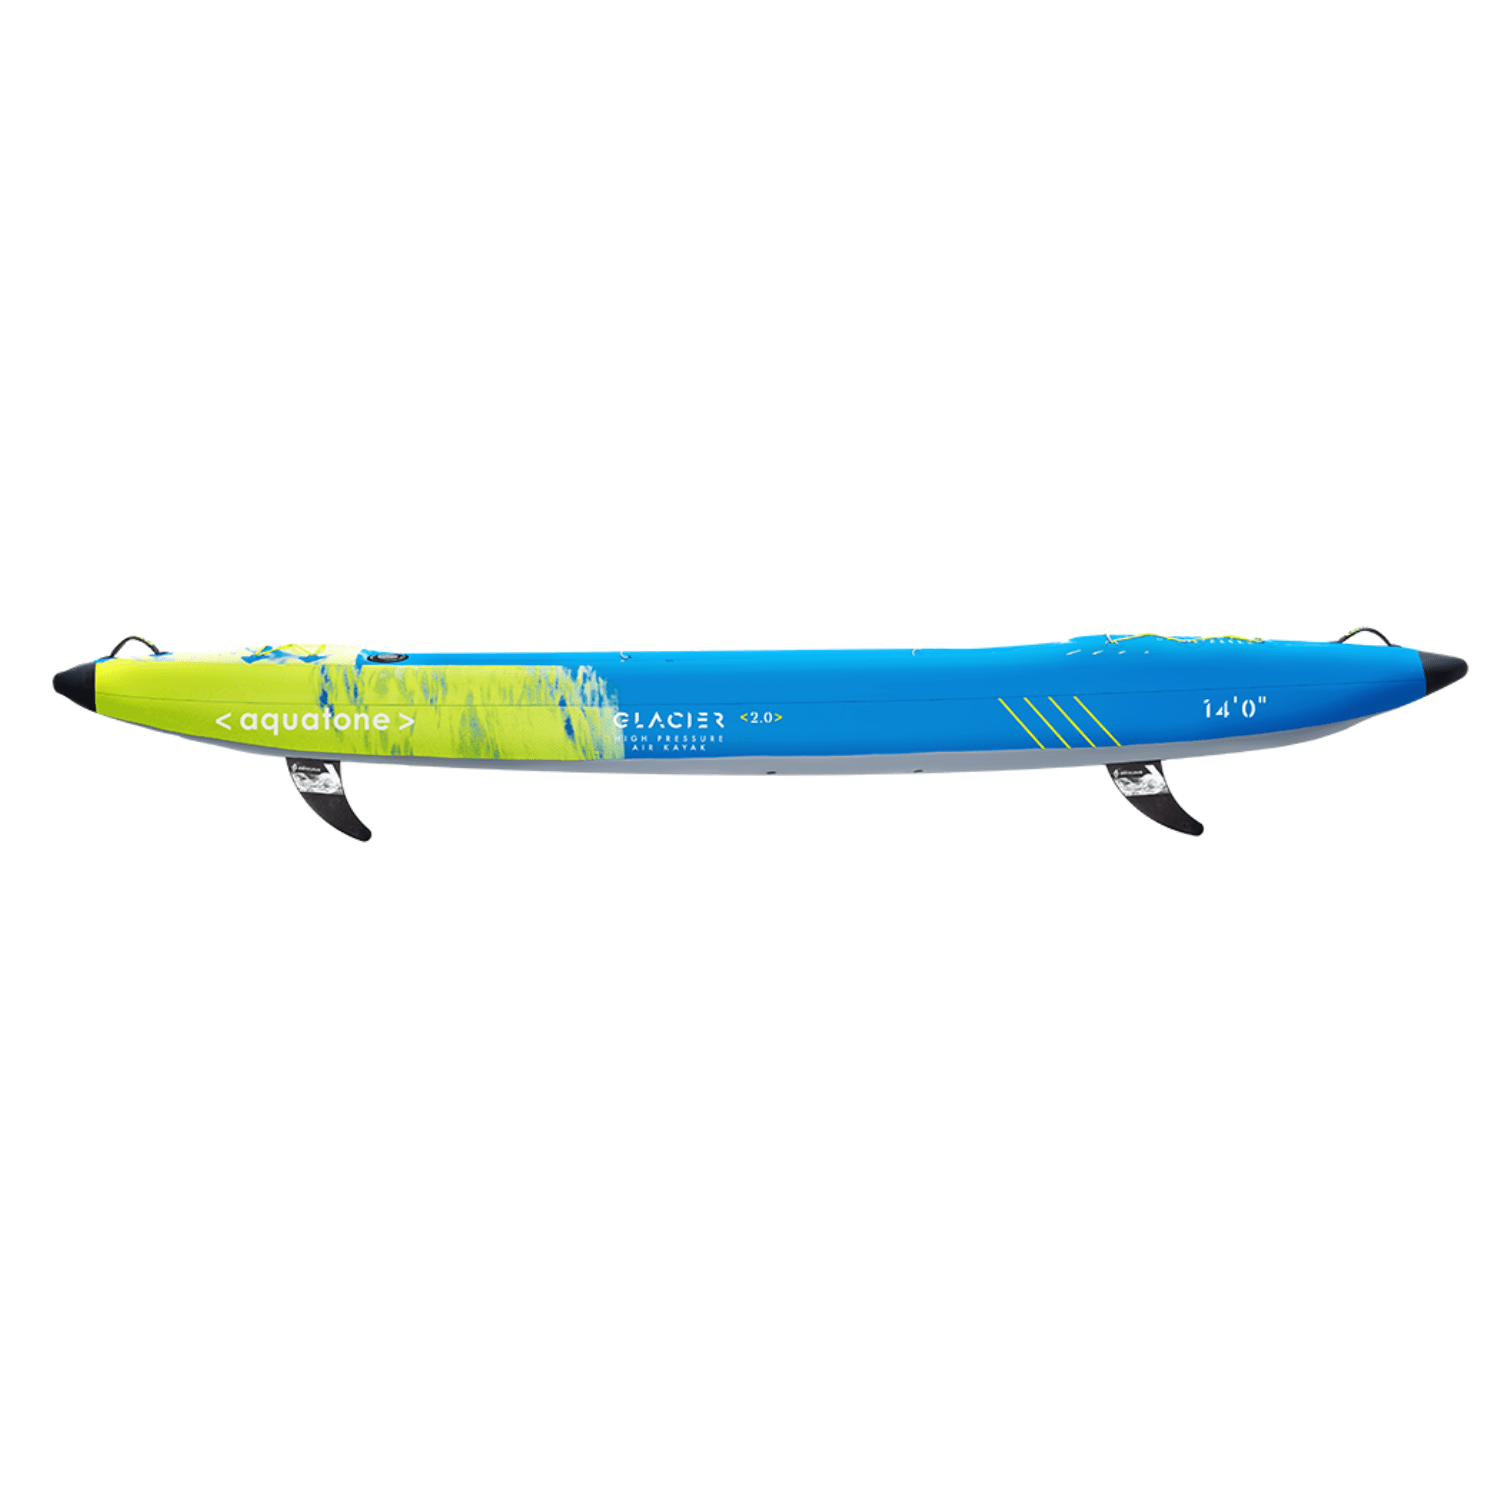 Aquatone GLACIER 14'0 Inflatable Kayak-Inflatable Kayaks-Aquatone-3